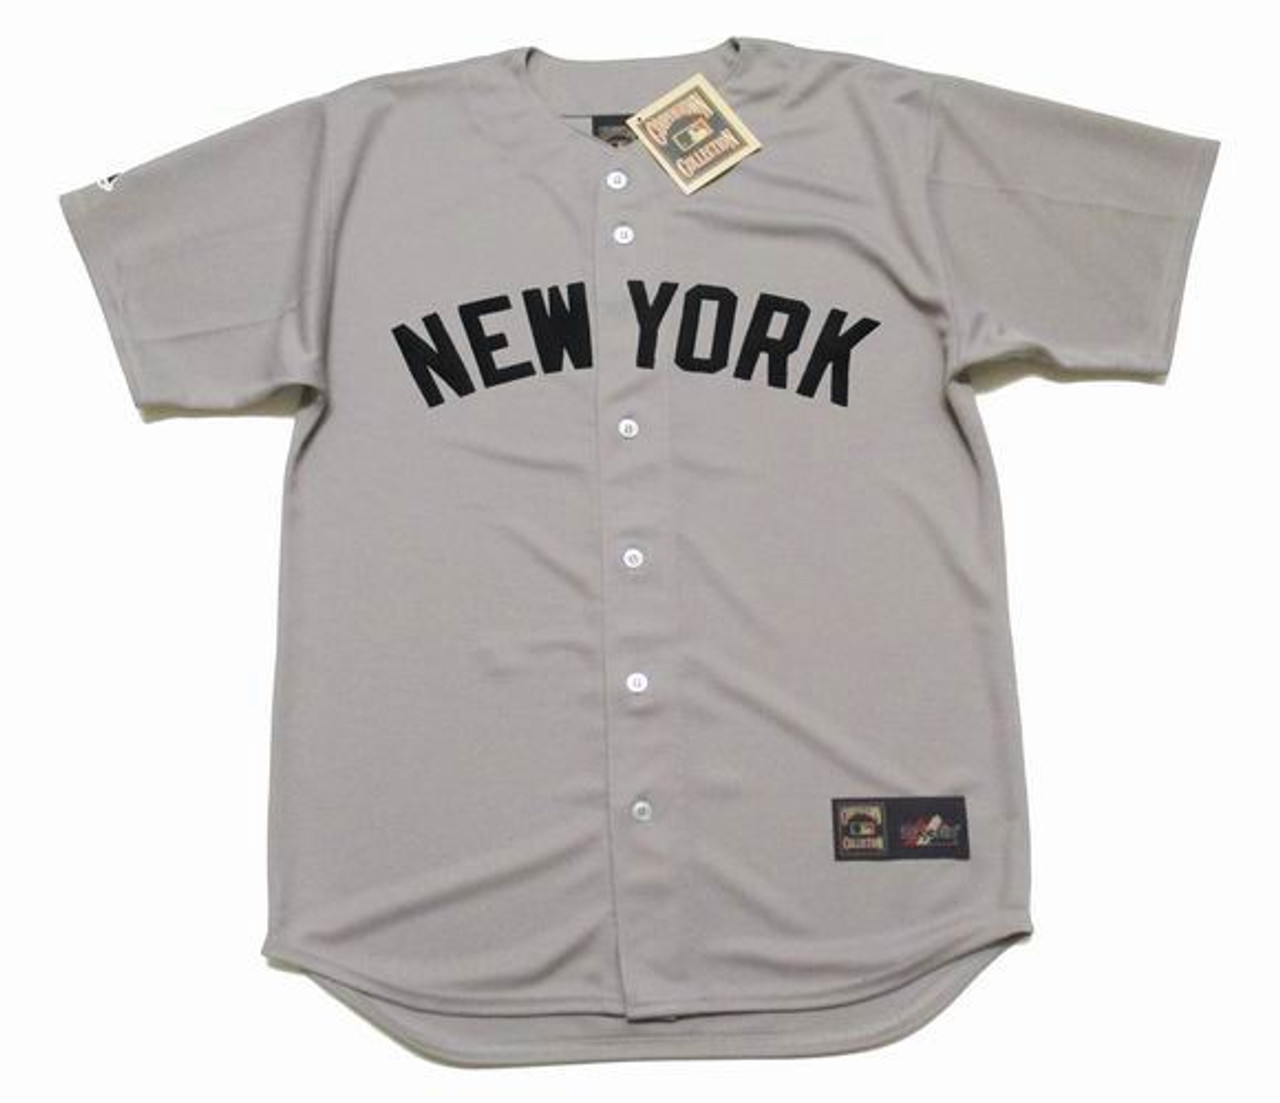 New York Yankees Throwback Jerseys, Yankees Retro & Vintage